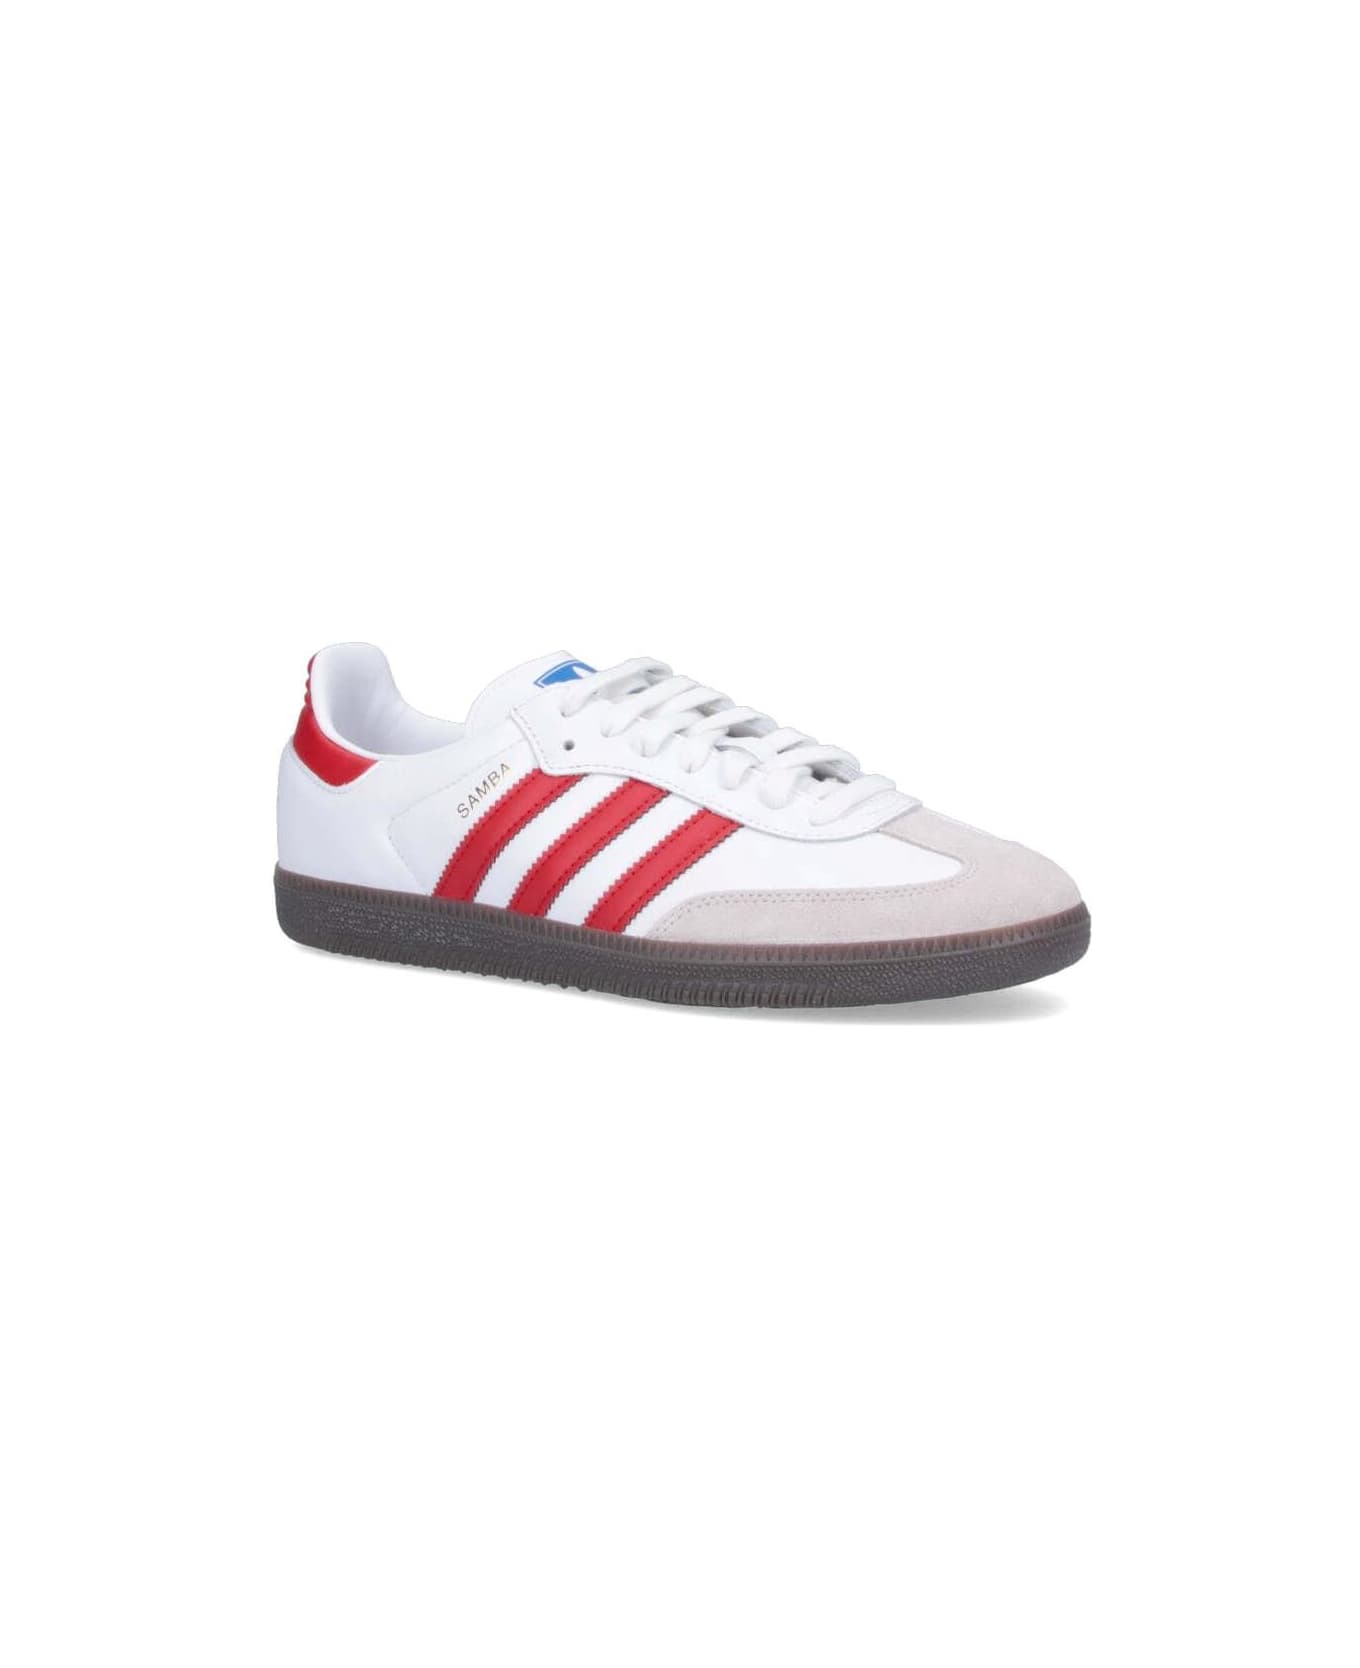 Adidas Originals 'samba' Sneakers - Ftwwht/betsca/supcol